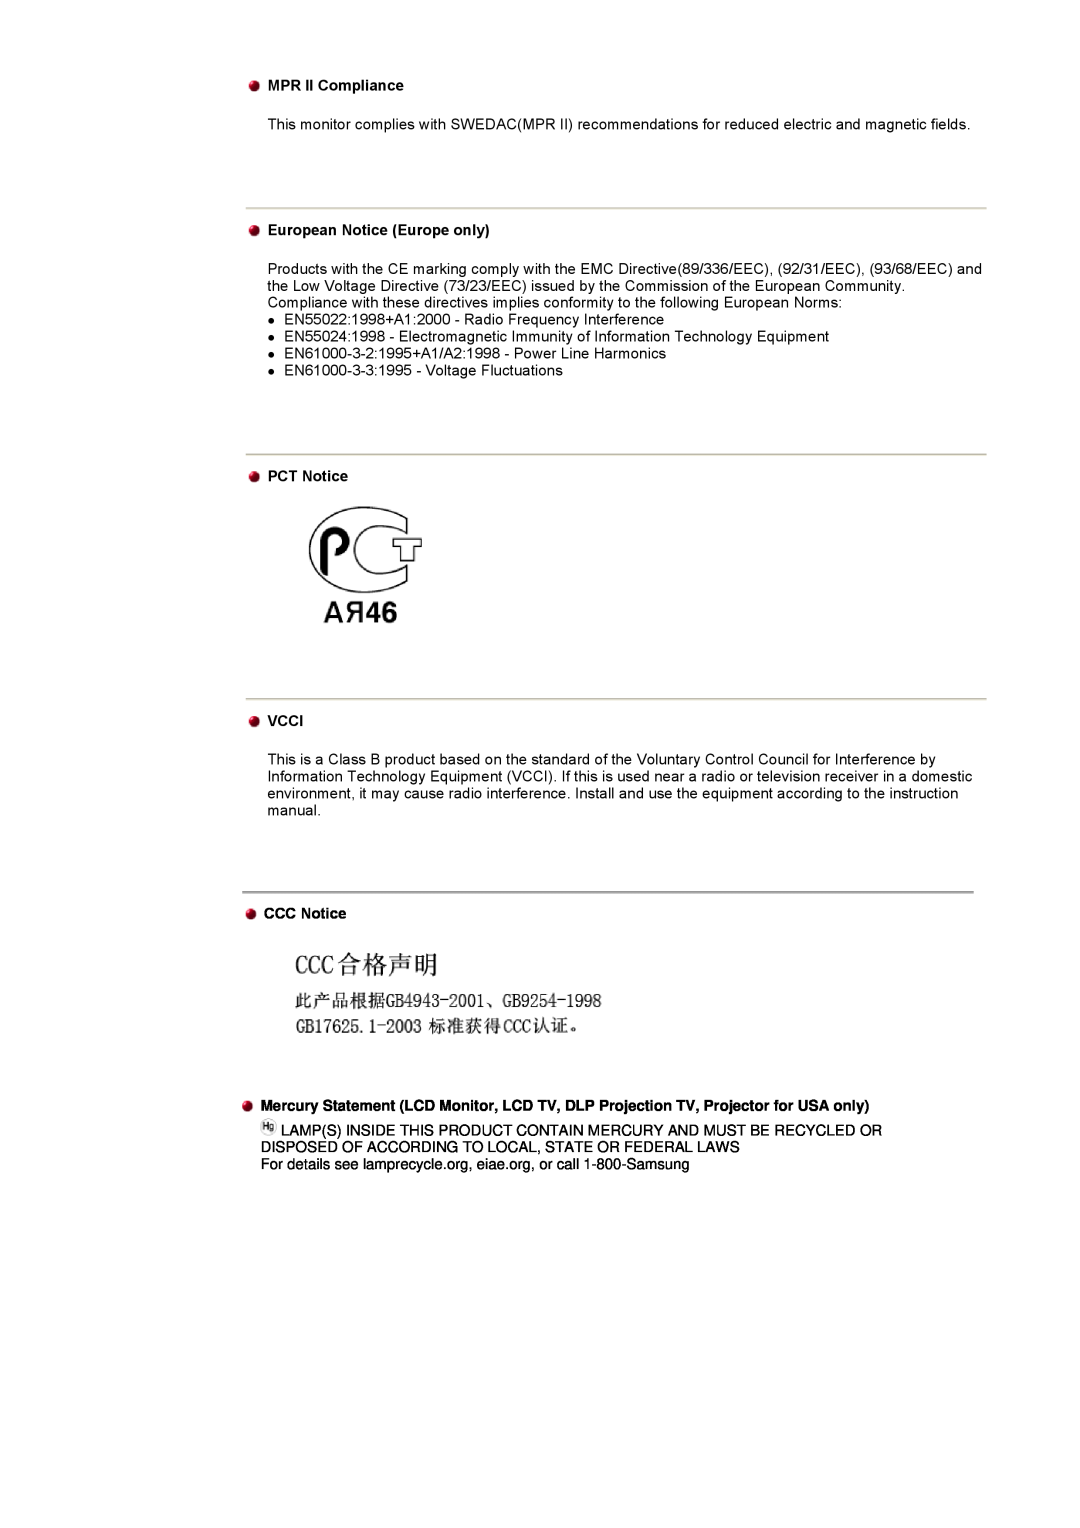 Samsung CK40BSNS/EDC, CK40PSNBG/EDC manual MPR II Compliance, European Notice Europe only, PCT Notice VCCI, CCC Notice 